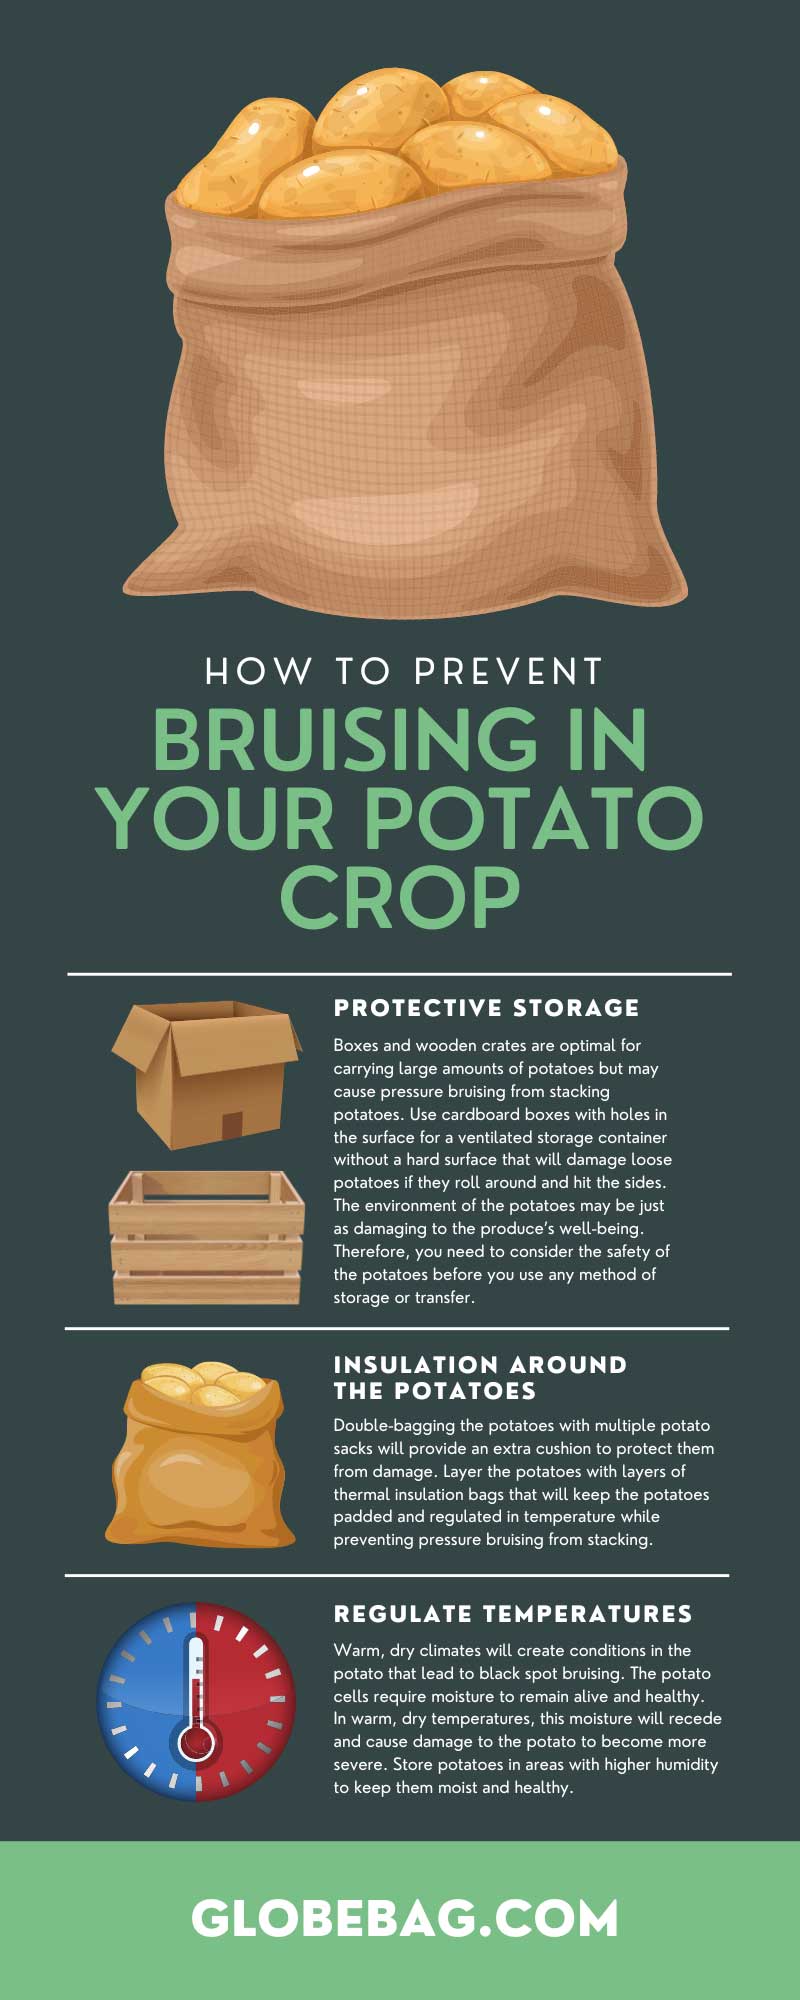 How To Prevent Bruising in Your Potato Crop